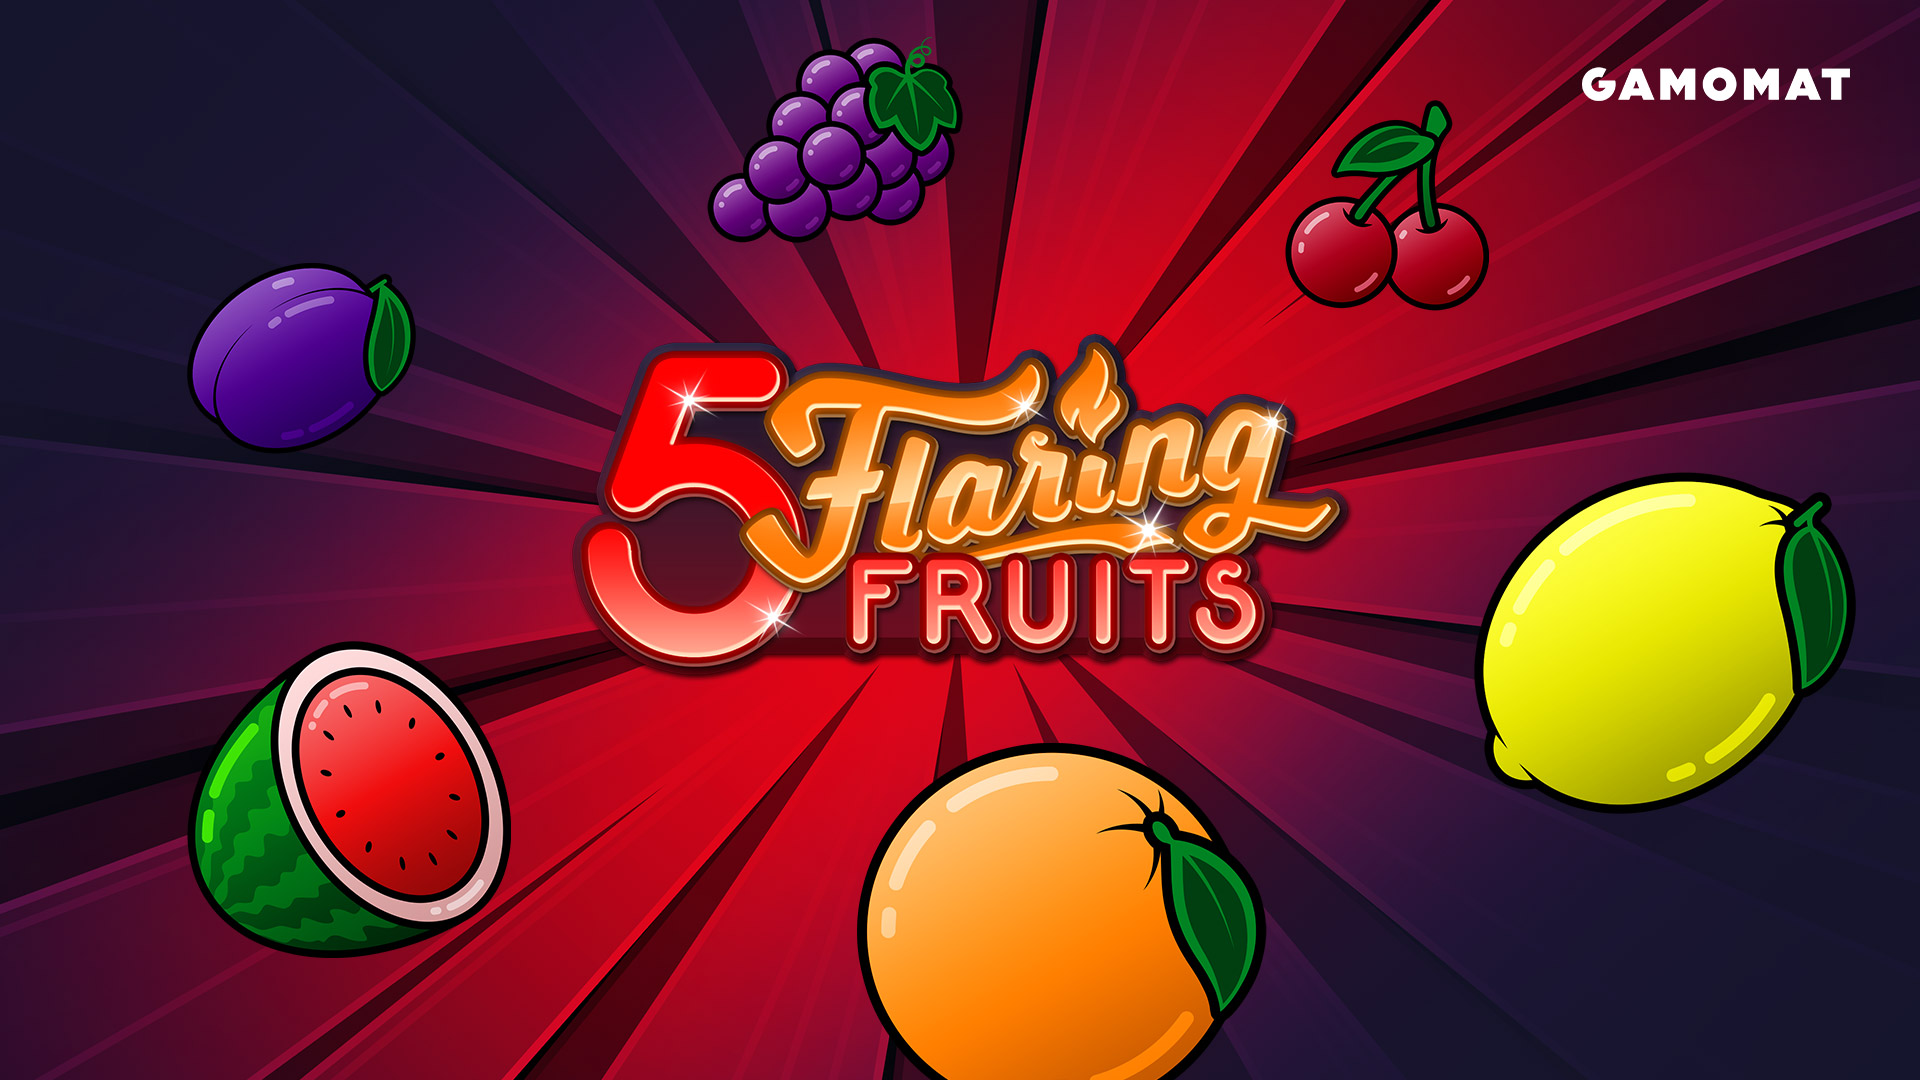 GAMOMAT releases 5 Flaring Fruits slot